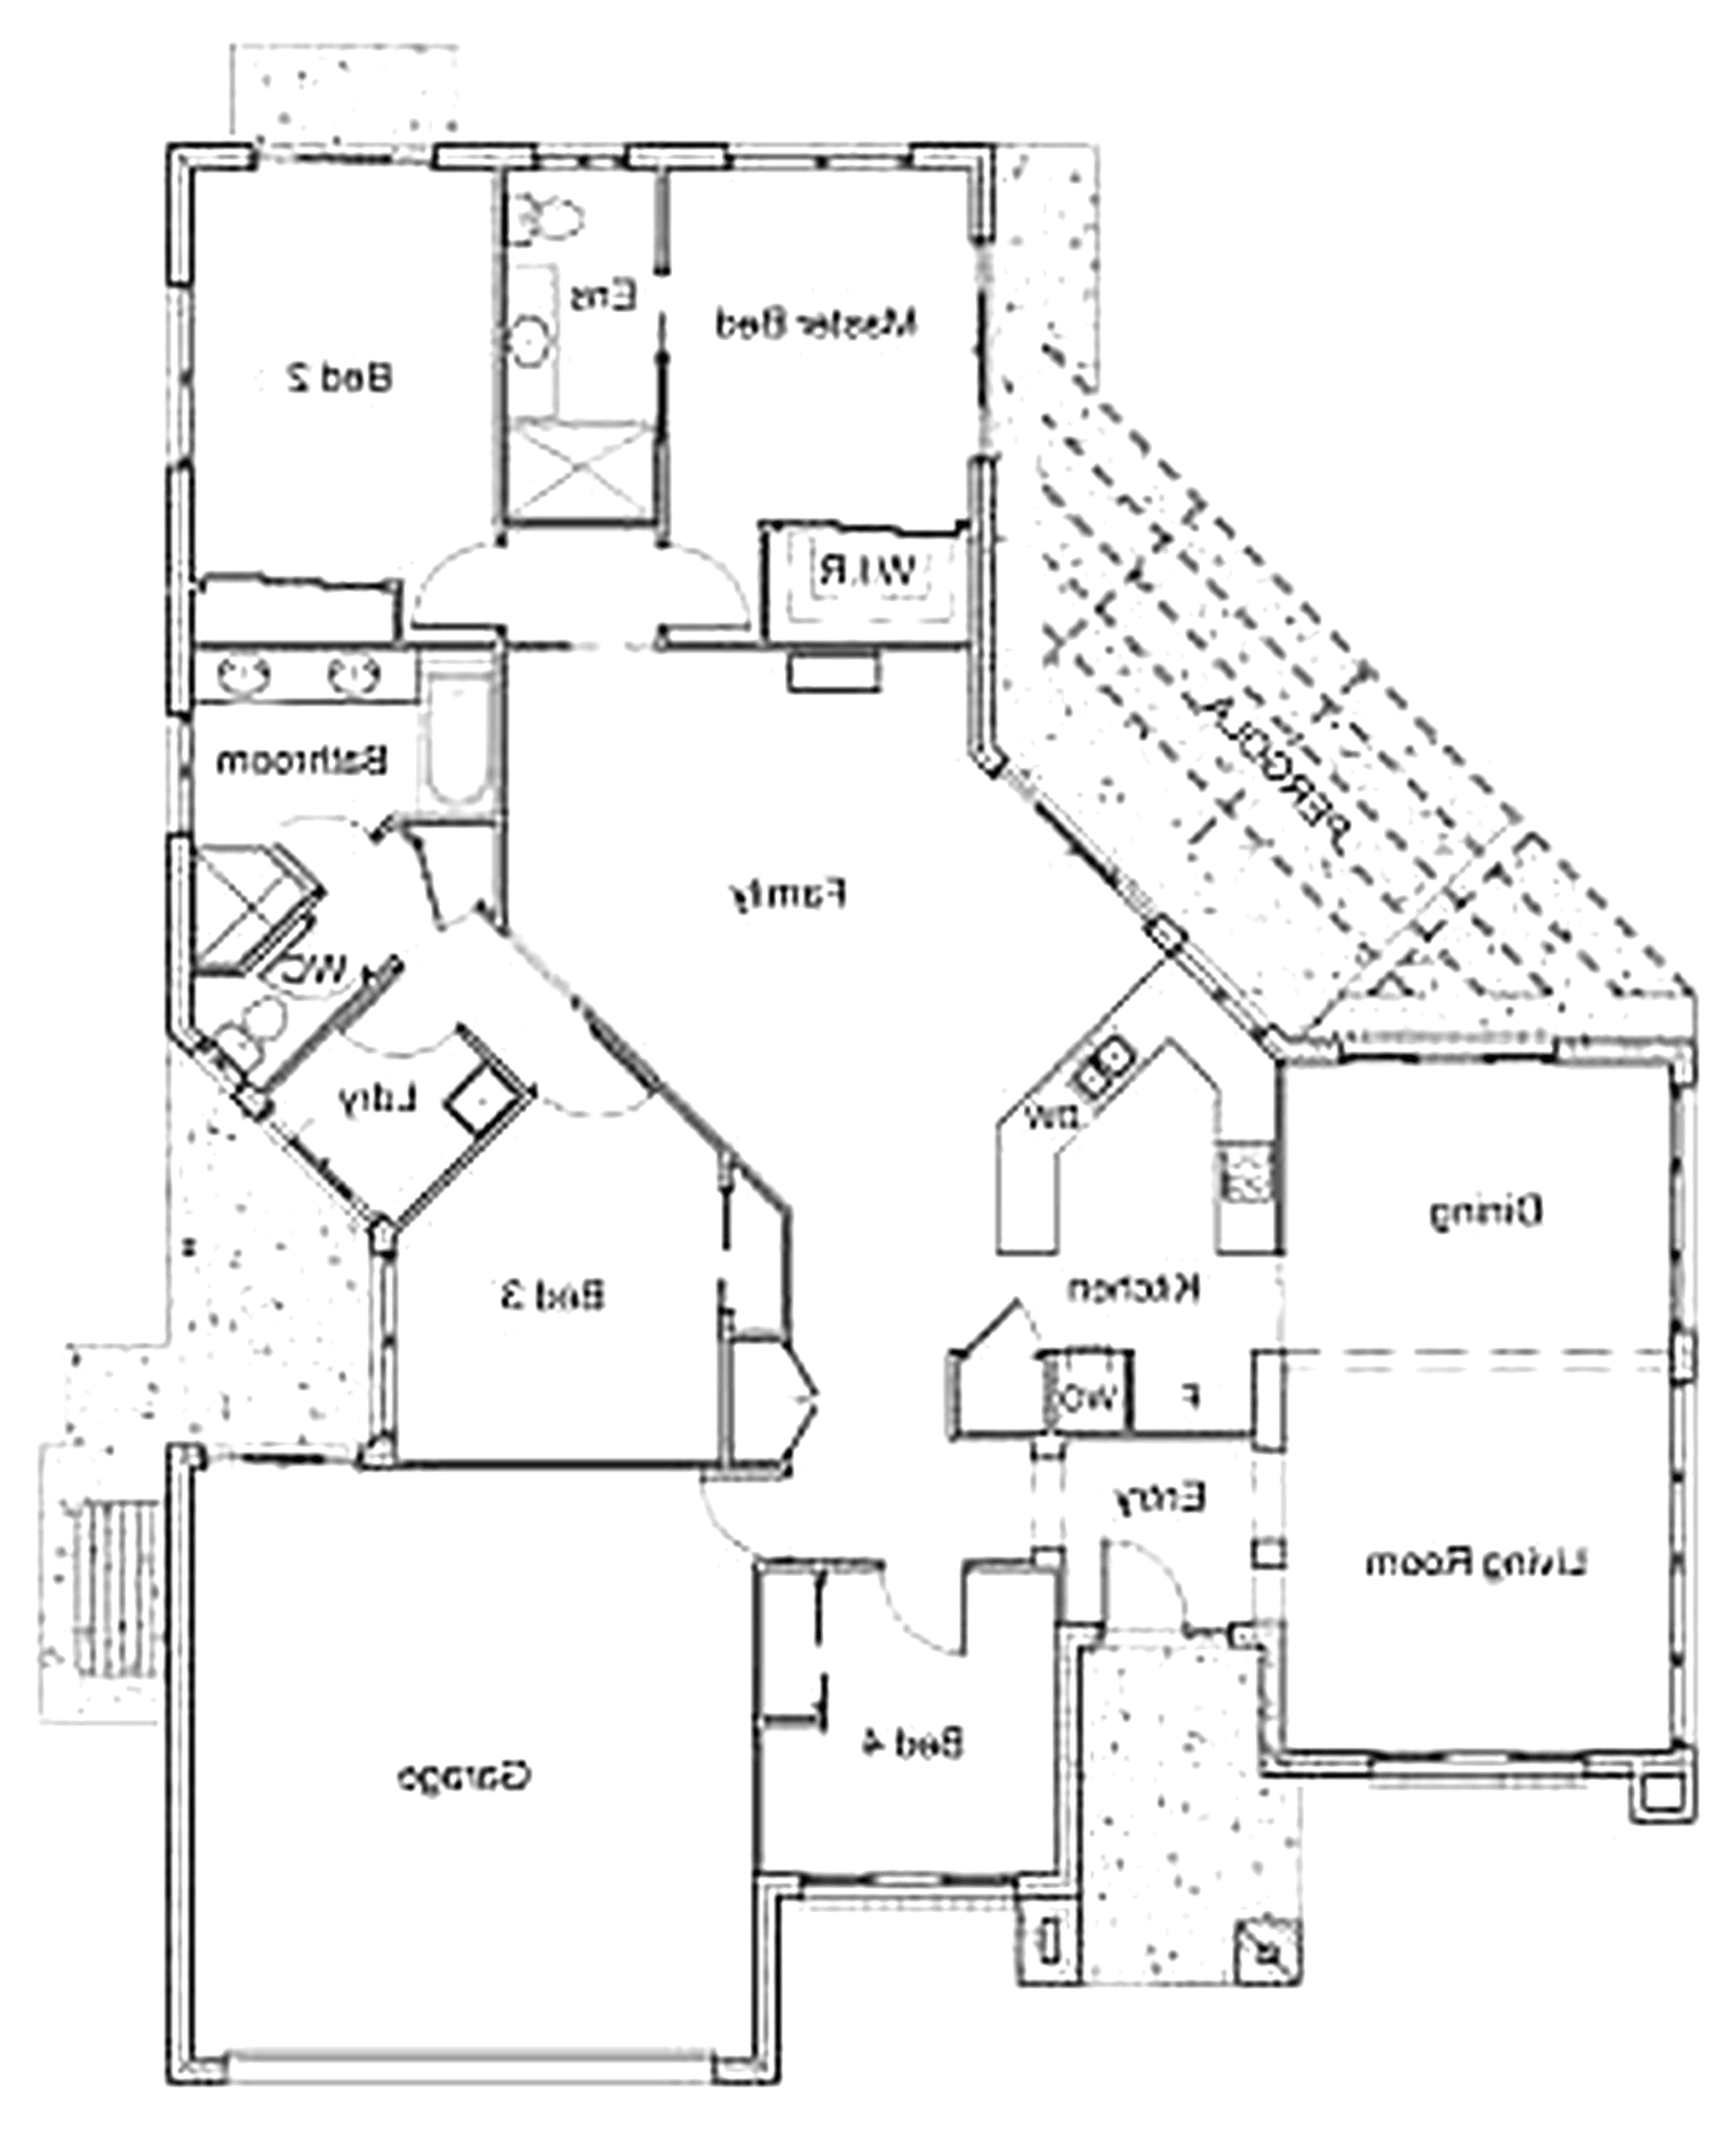 F Drawings Blueprints 22 Excellent House Sketch Plan Layout Floor Plan Design